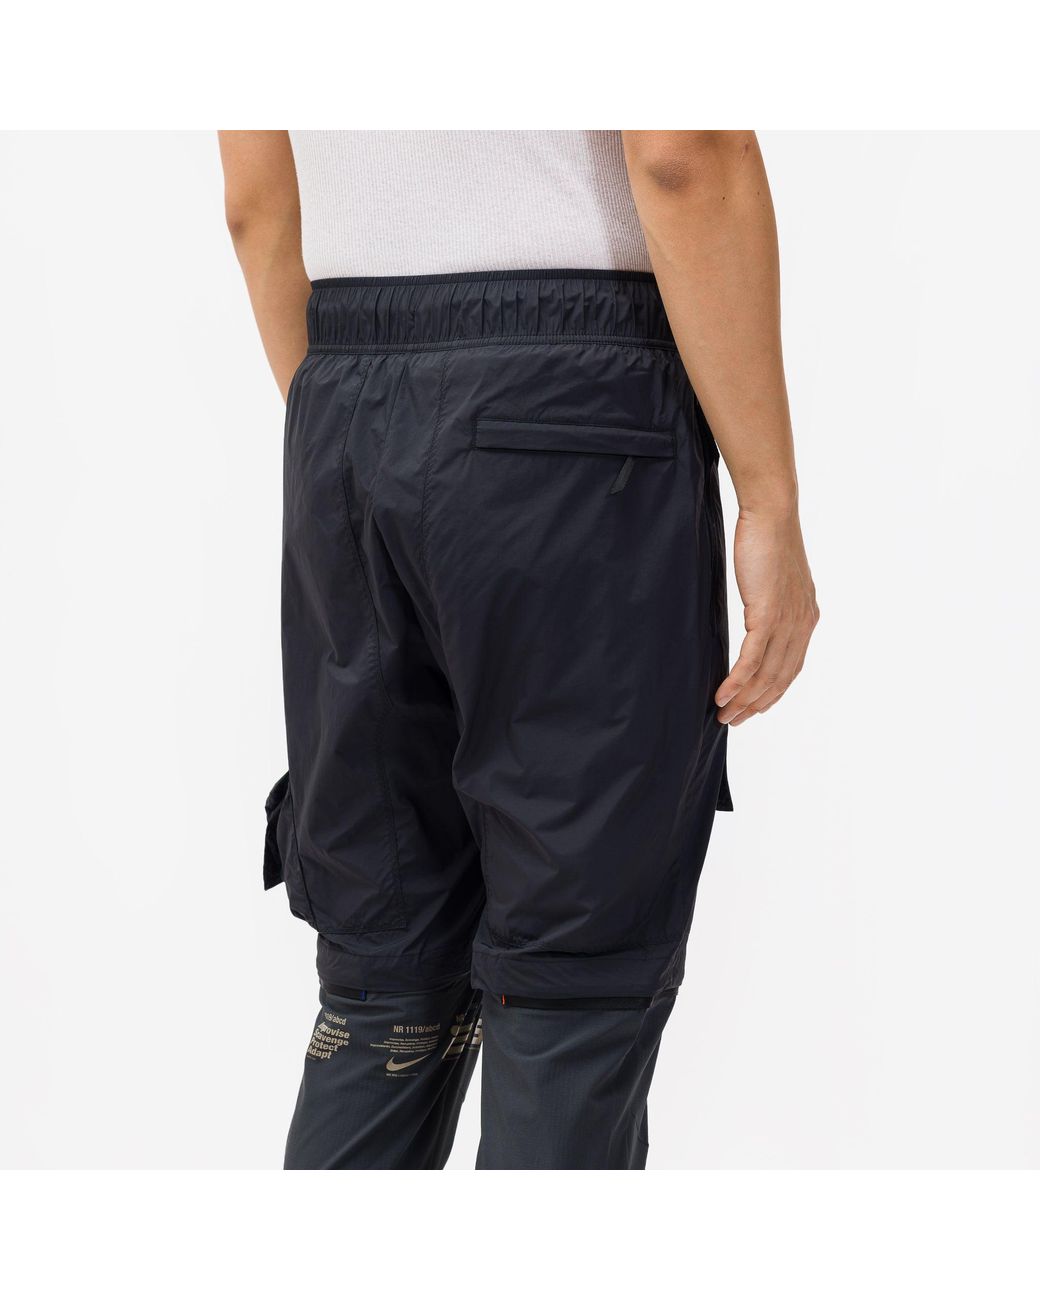 Nike Synthetic Ispa Nrg Cargo Pants in Black/Black (Black) for Men | Lyst